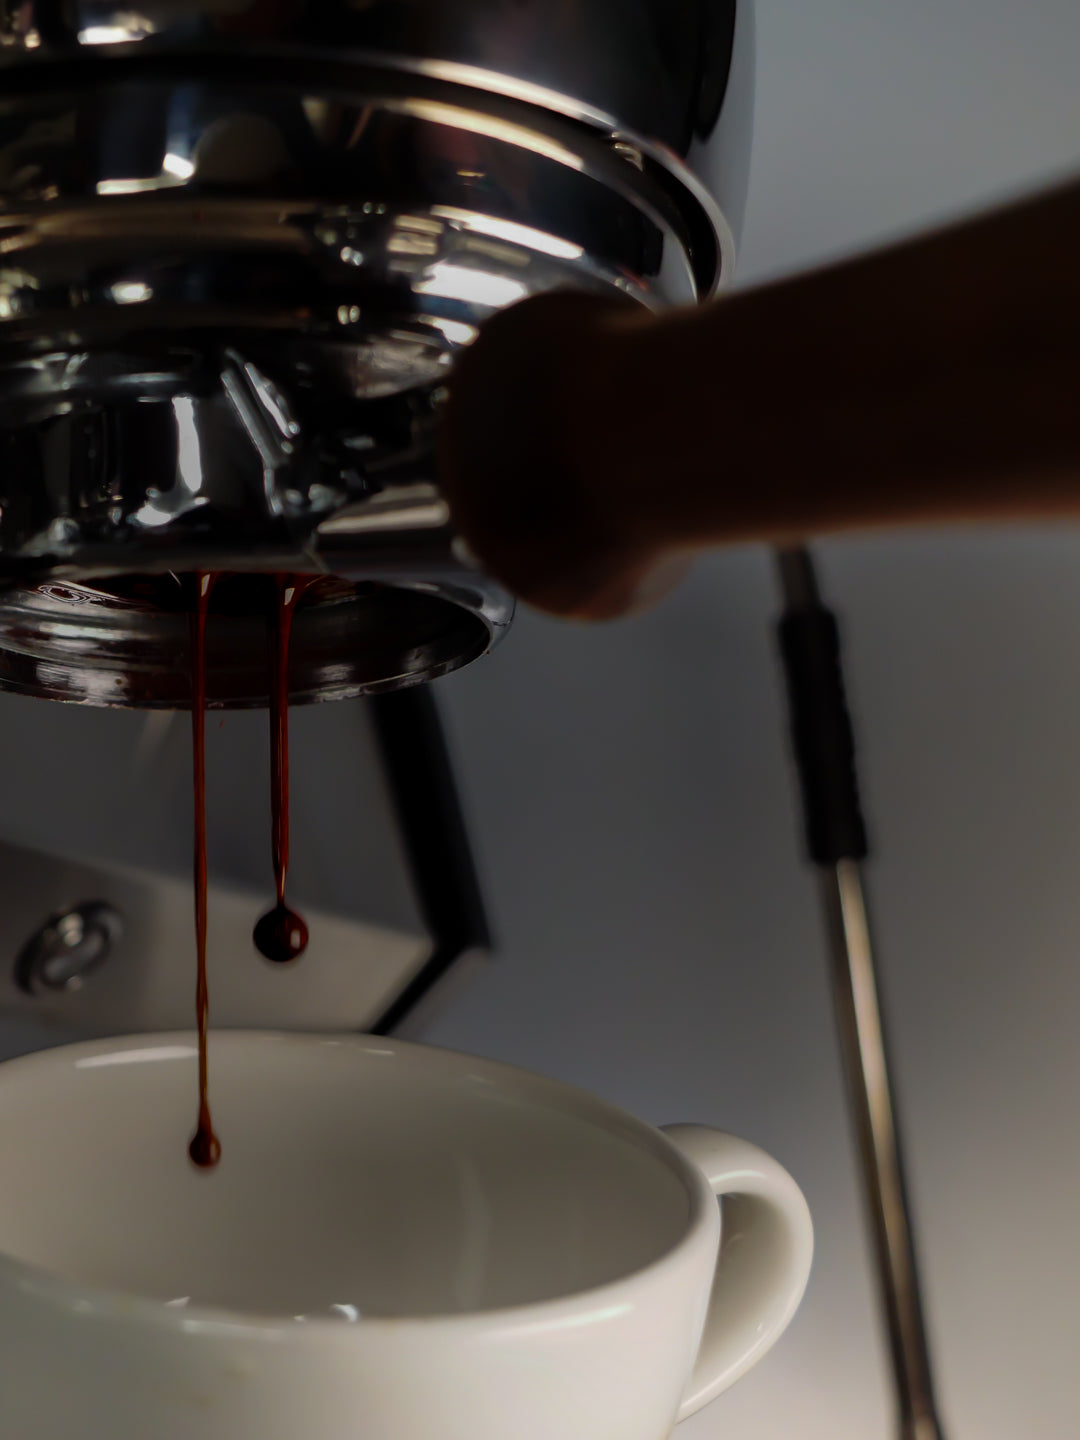 A shot of espresso dripping through a blind portafilter basket on a Slayer V3 espresso machine at the Loom Coffee Co. roasting facility.